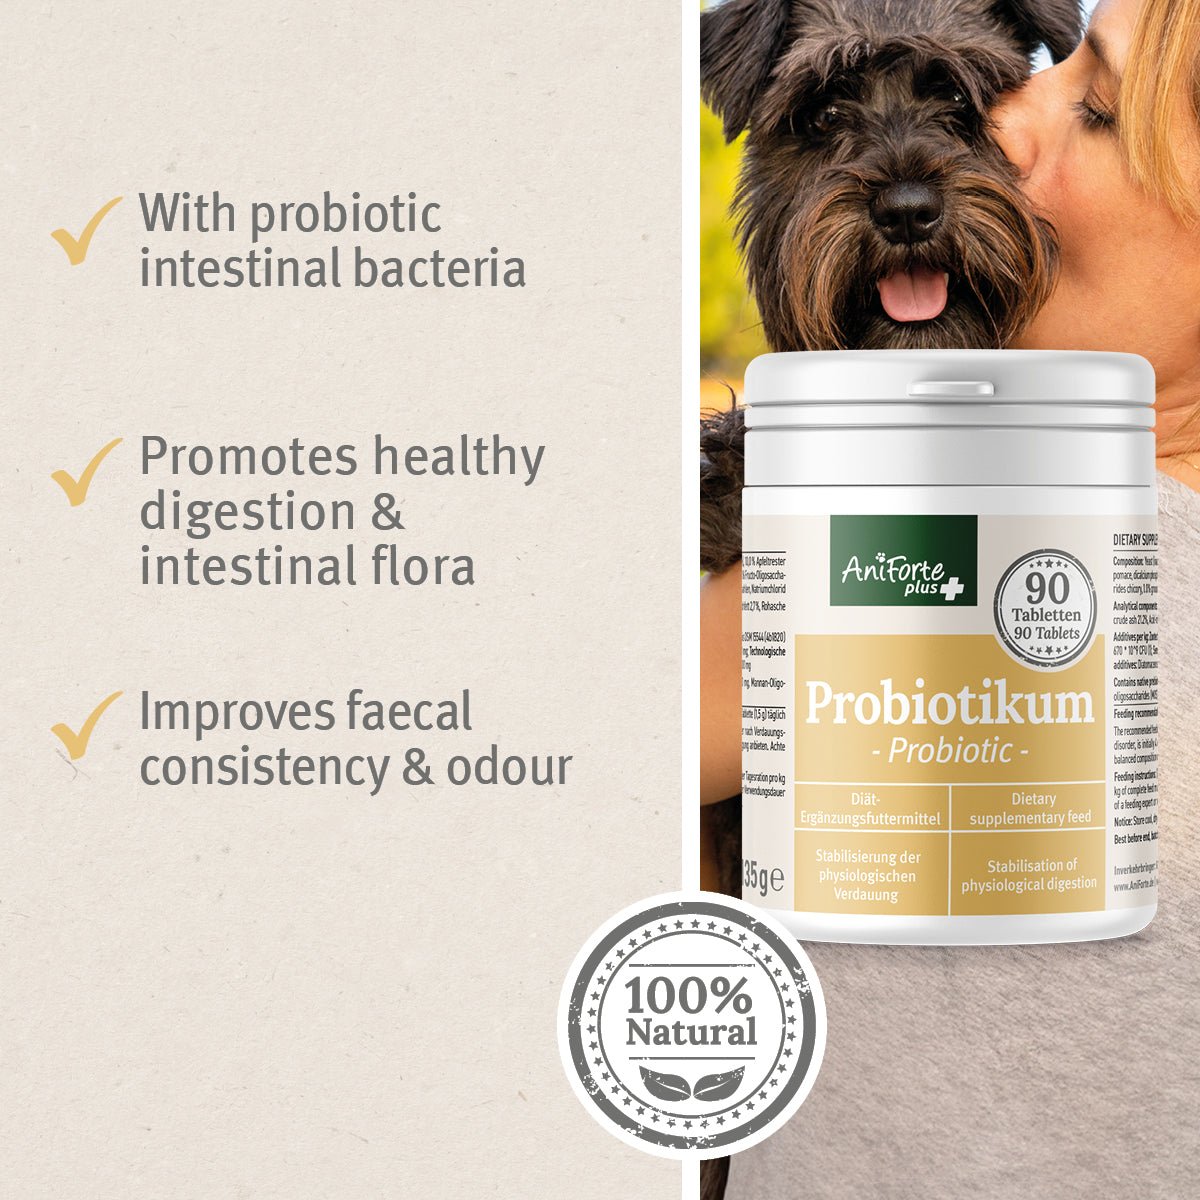 Aniforte® plus Probiotic Tabs - AniForte UK